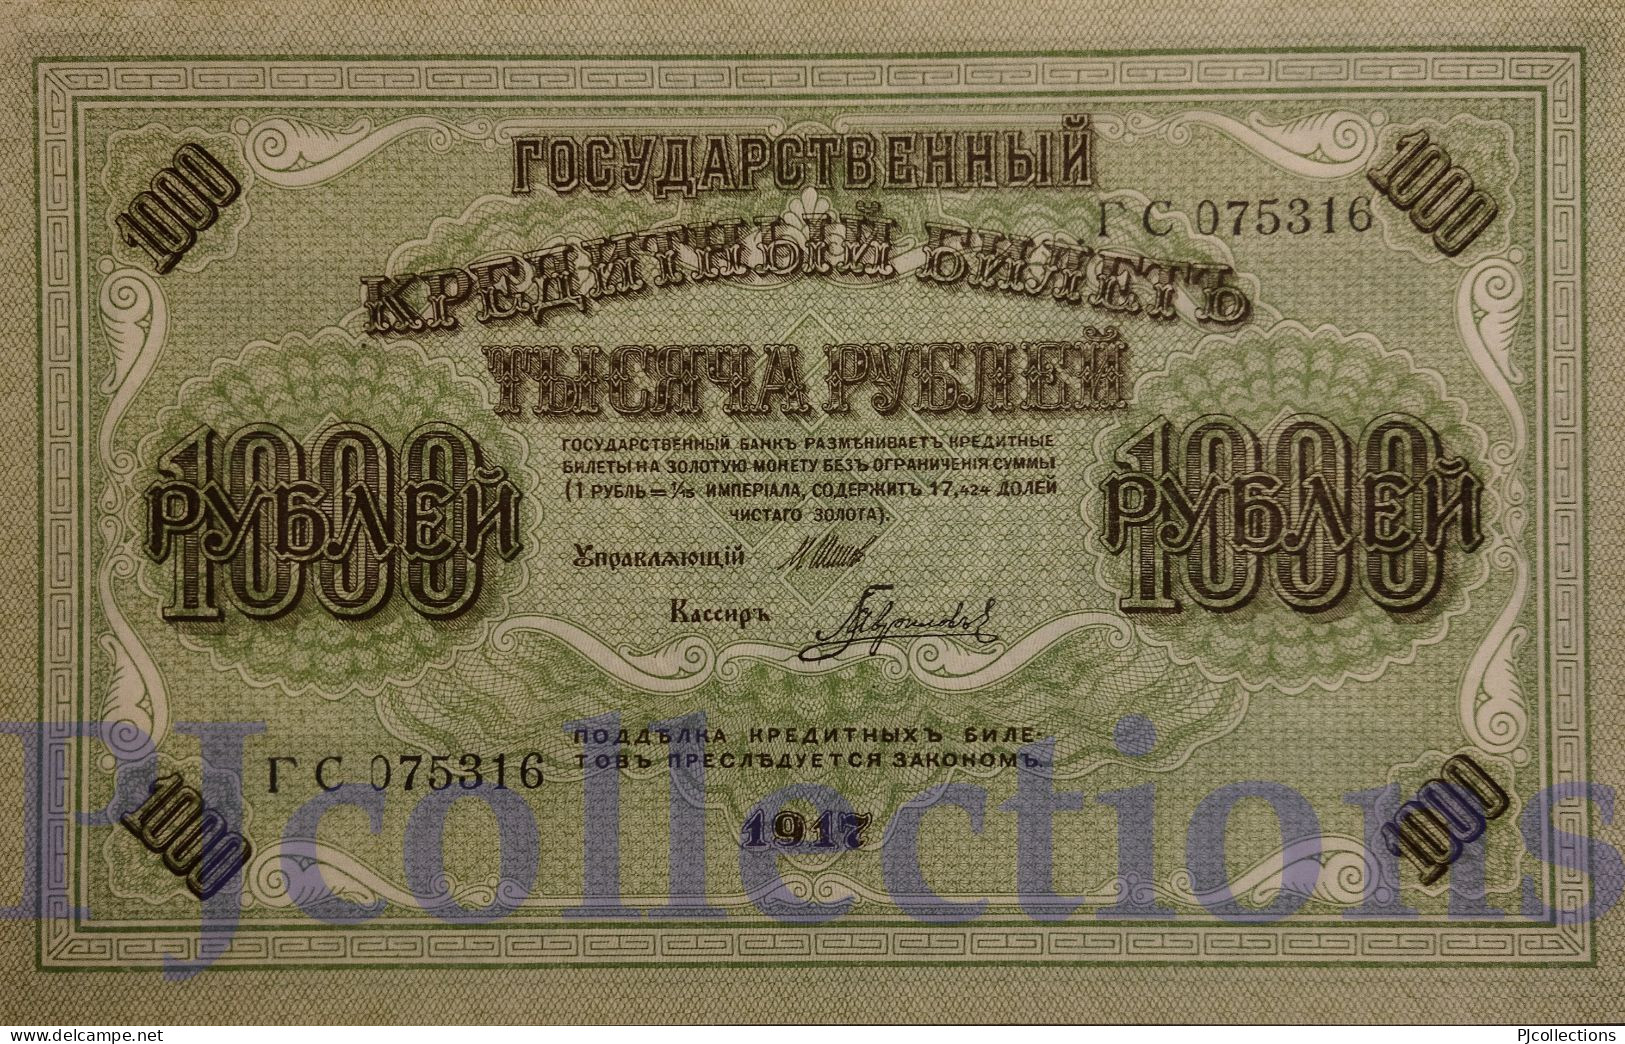 RUSSIA 1000 RUBLES 1917 PICK 37 UNC LARGE SIZE - Russia